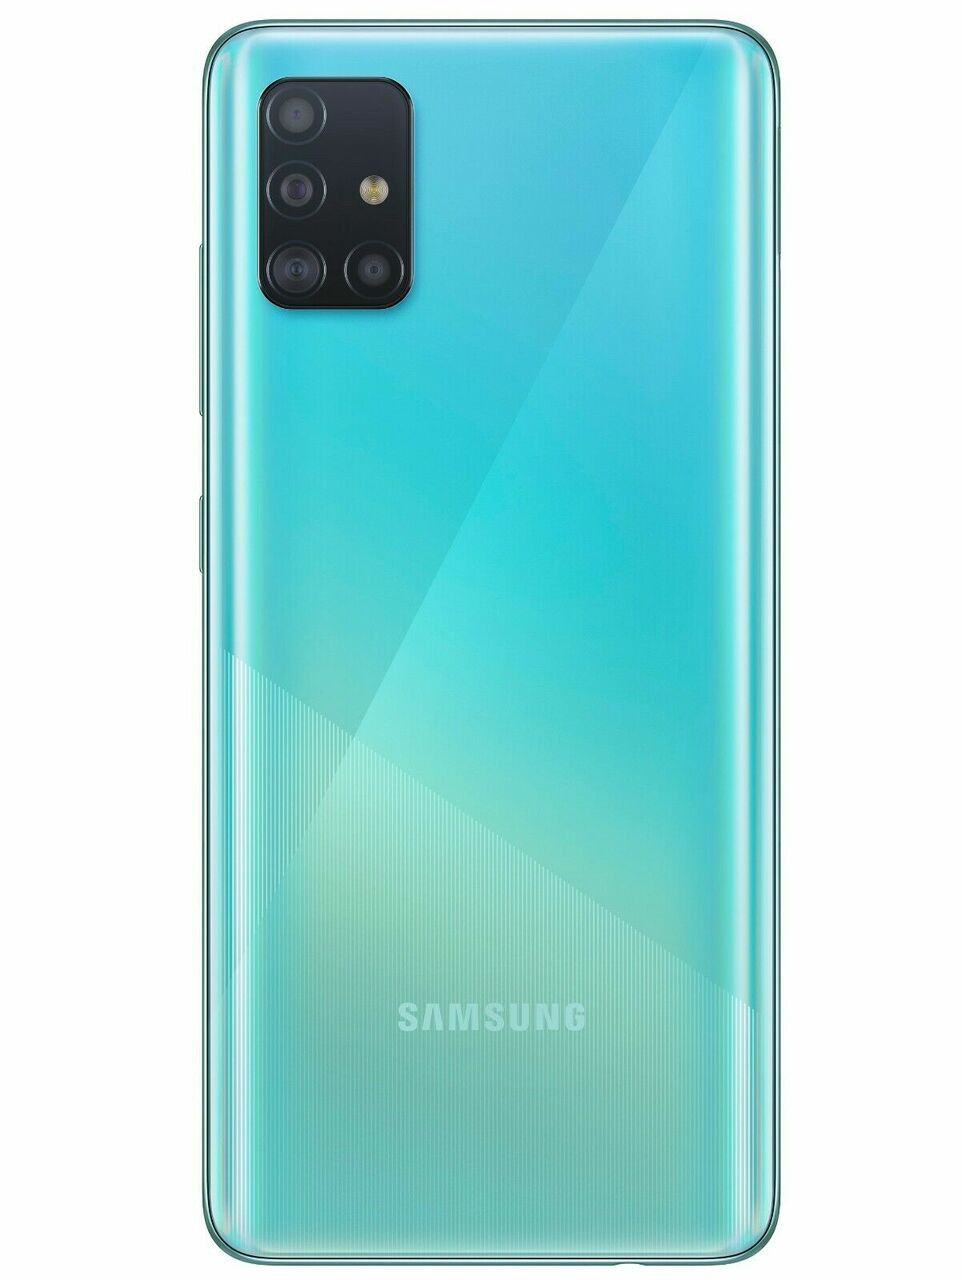 Samsung Galaxy A51 - (VENANT) - 128 Go de mémoire interne